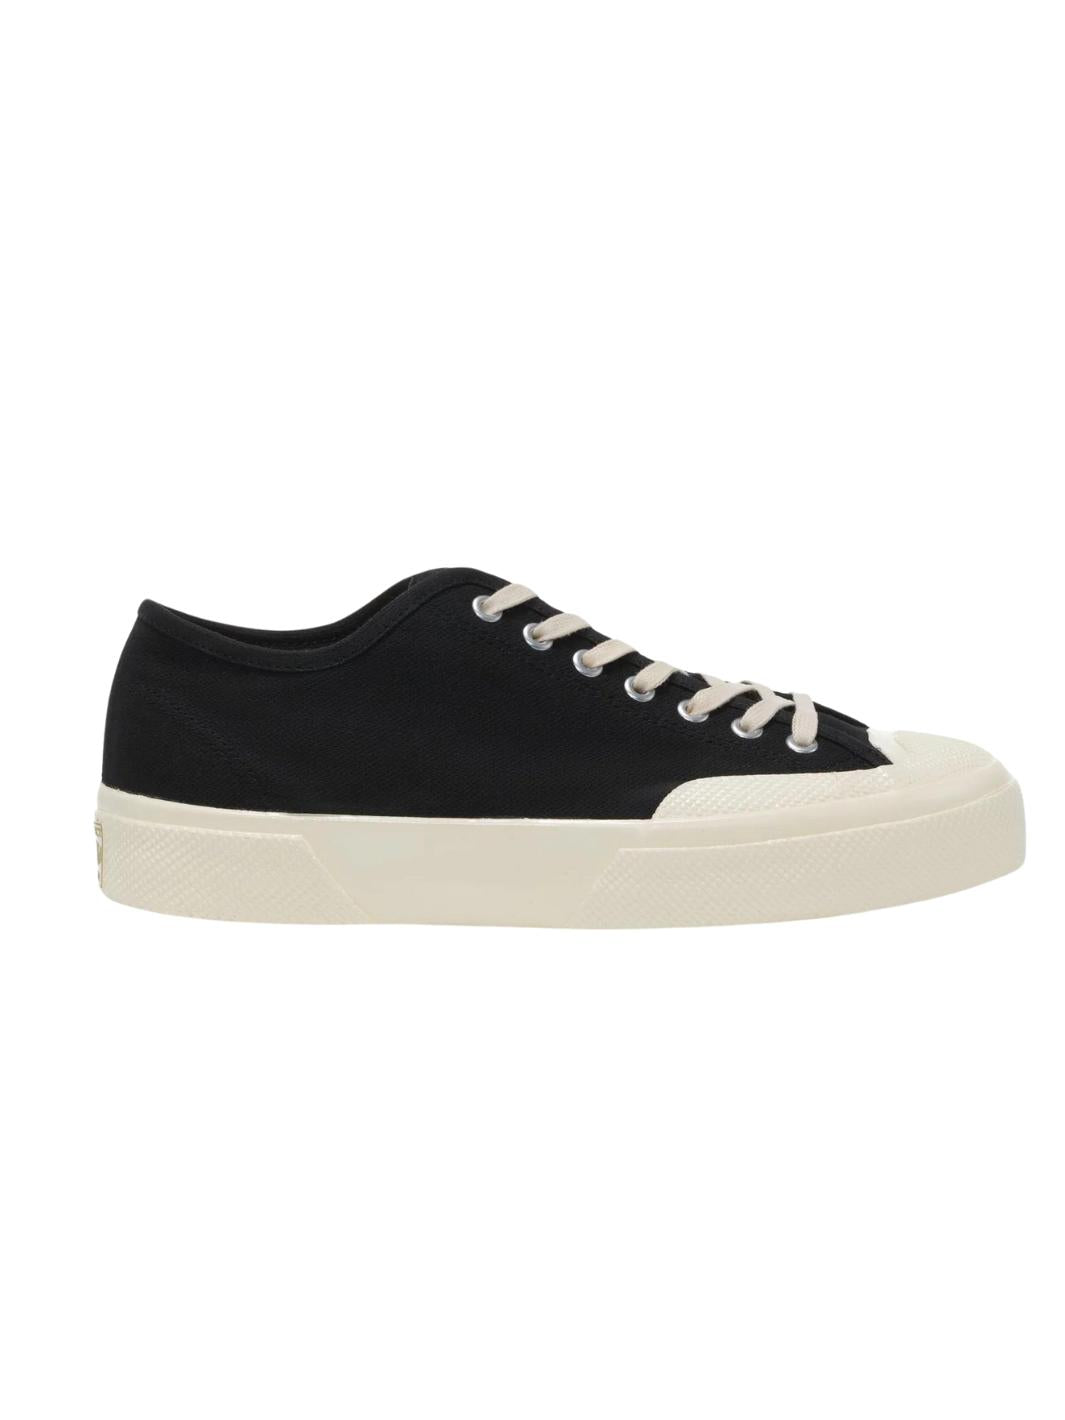 Superga Shoes Sneakers | Artifact 2432 Workwear Black/Off-White